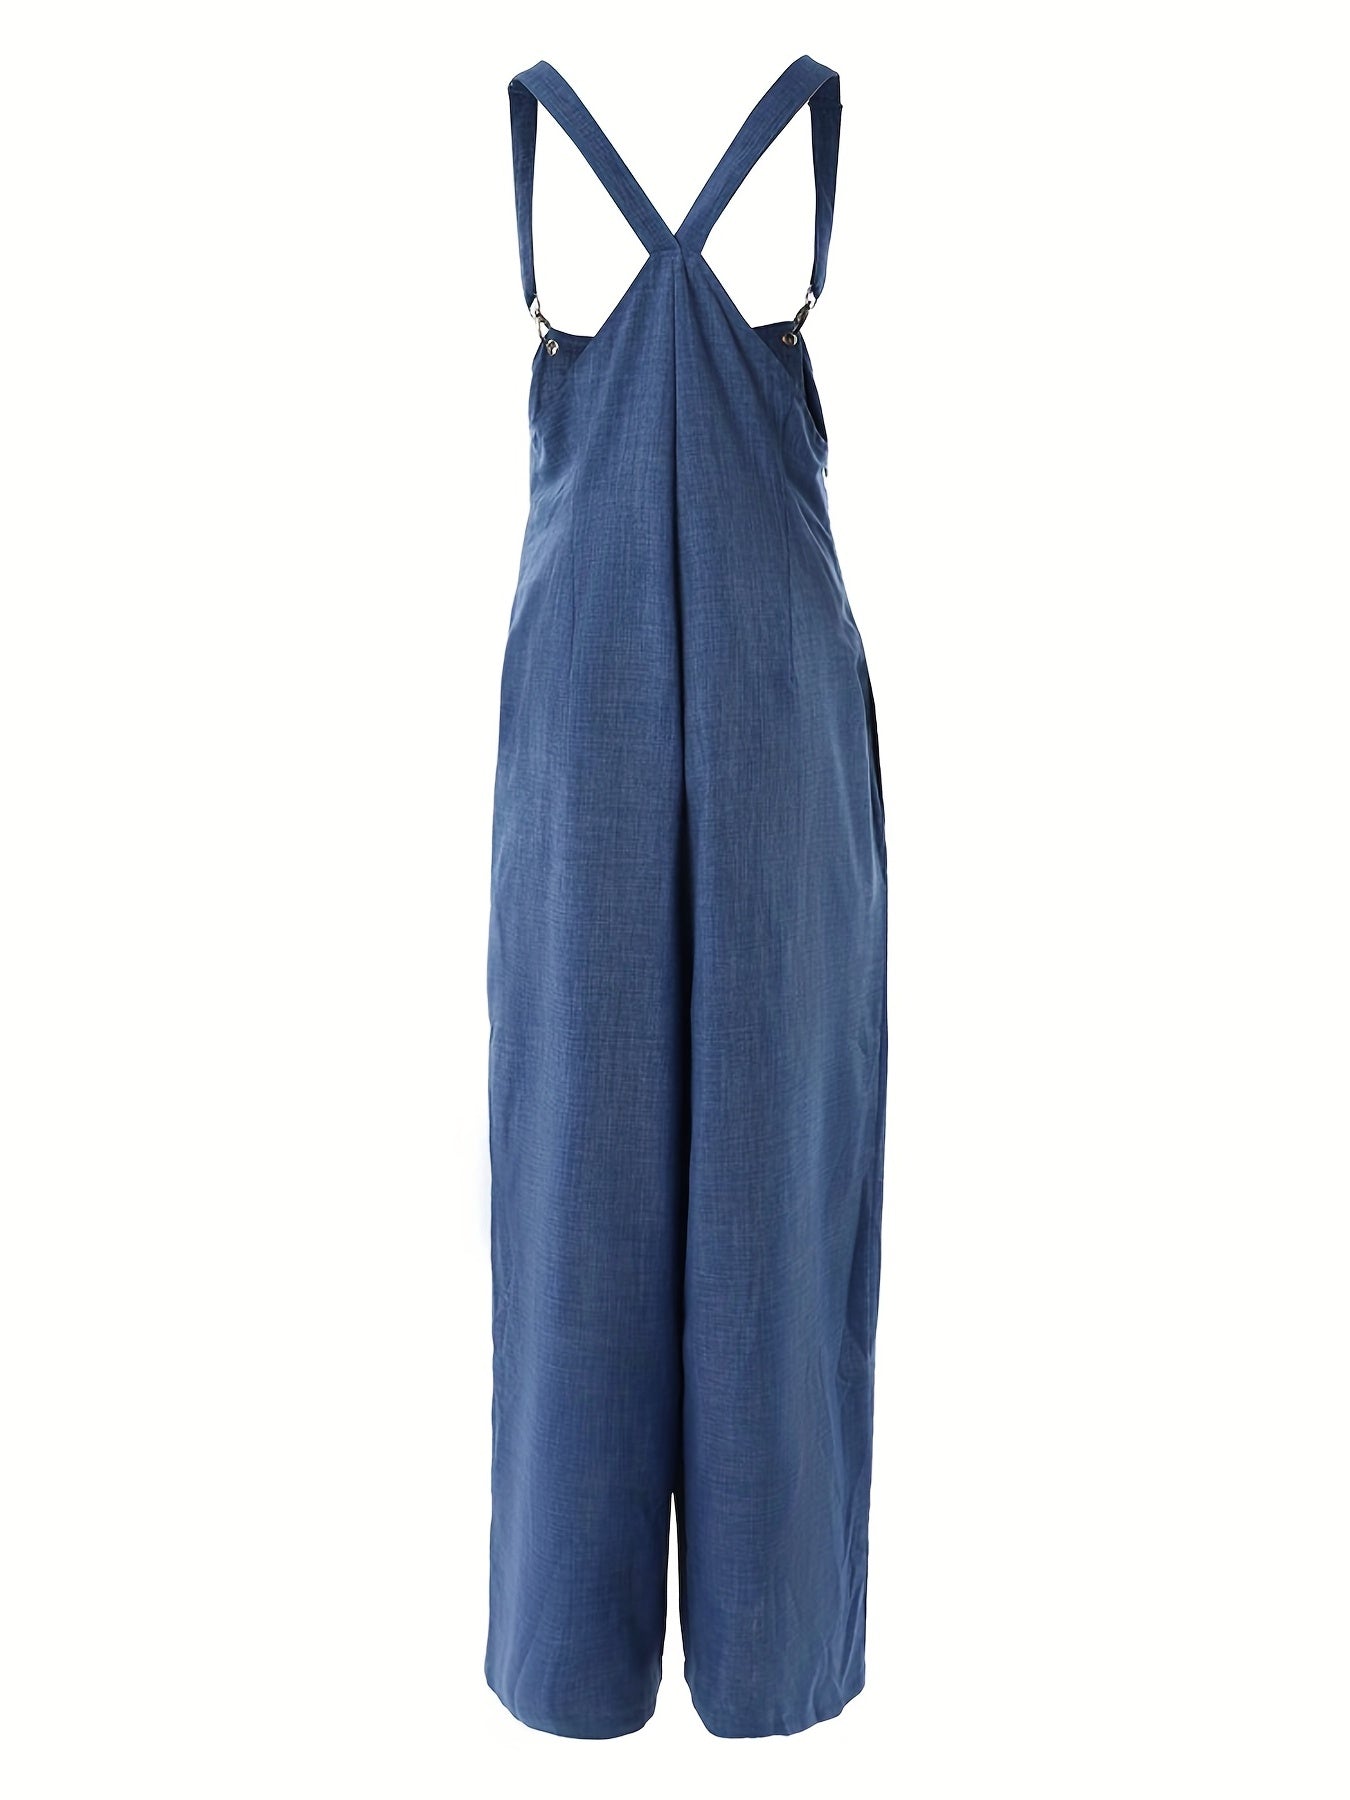 gbolsos  Zipper Overall Jumpsuit, Casual Wide Leg Sleeveless Jumpsuit, Women's Clothing